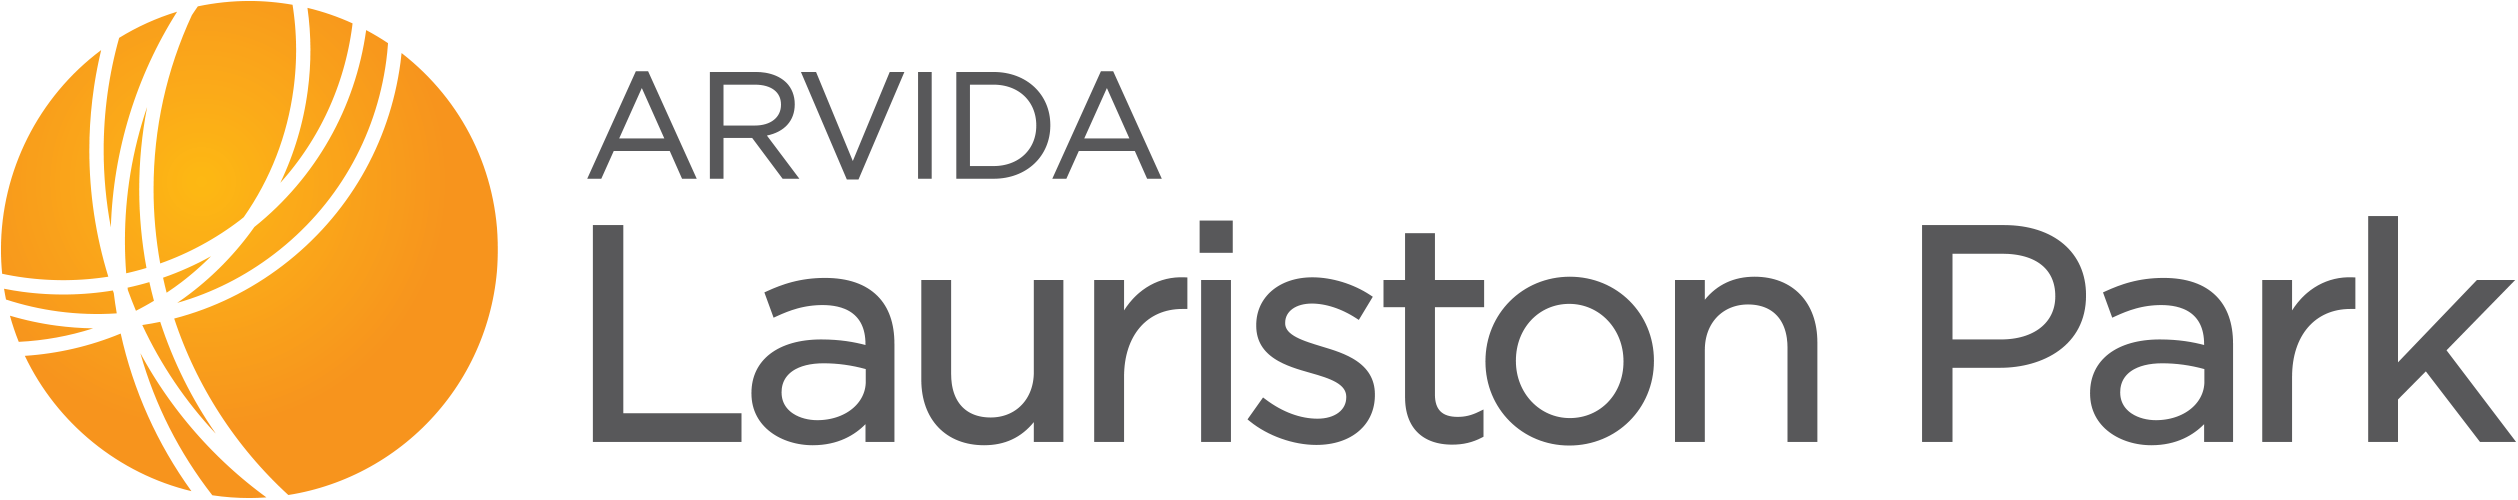 Lauriston Park | Arvida logo